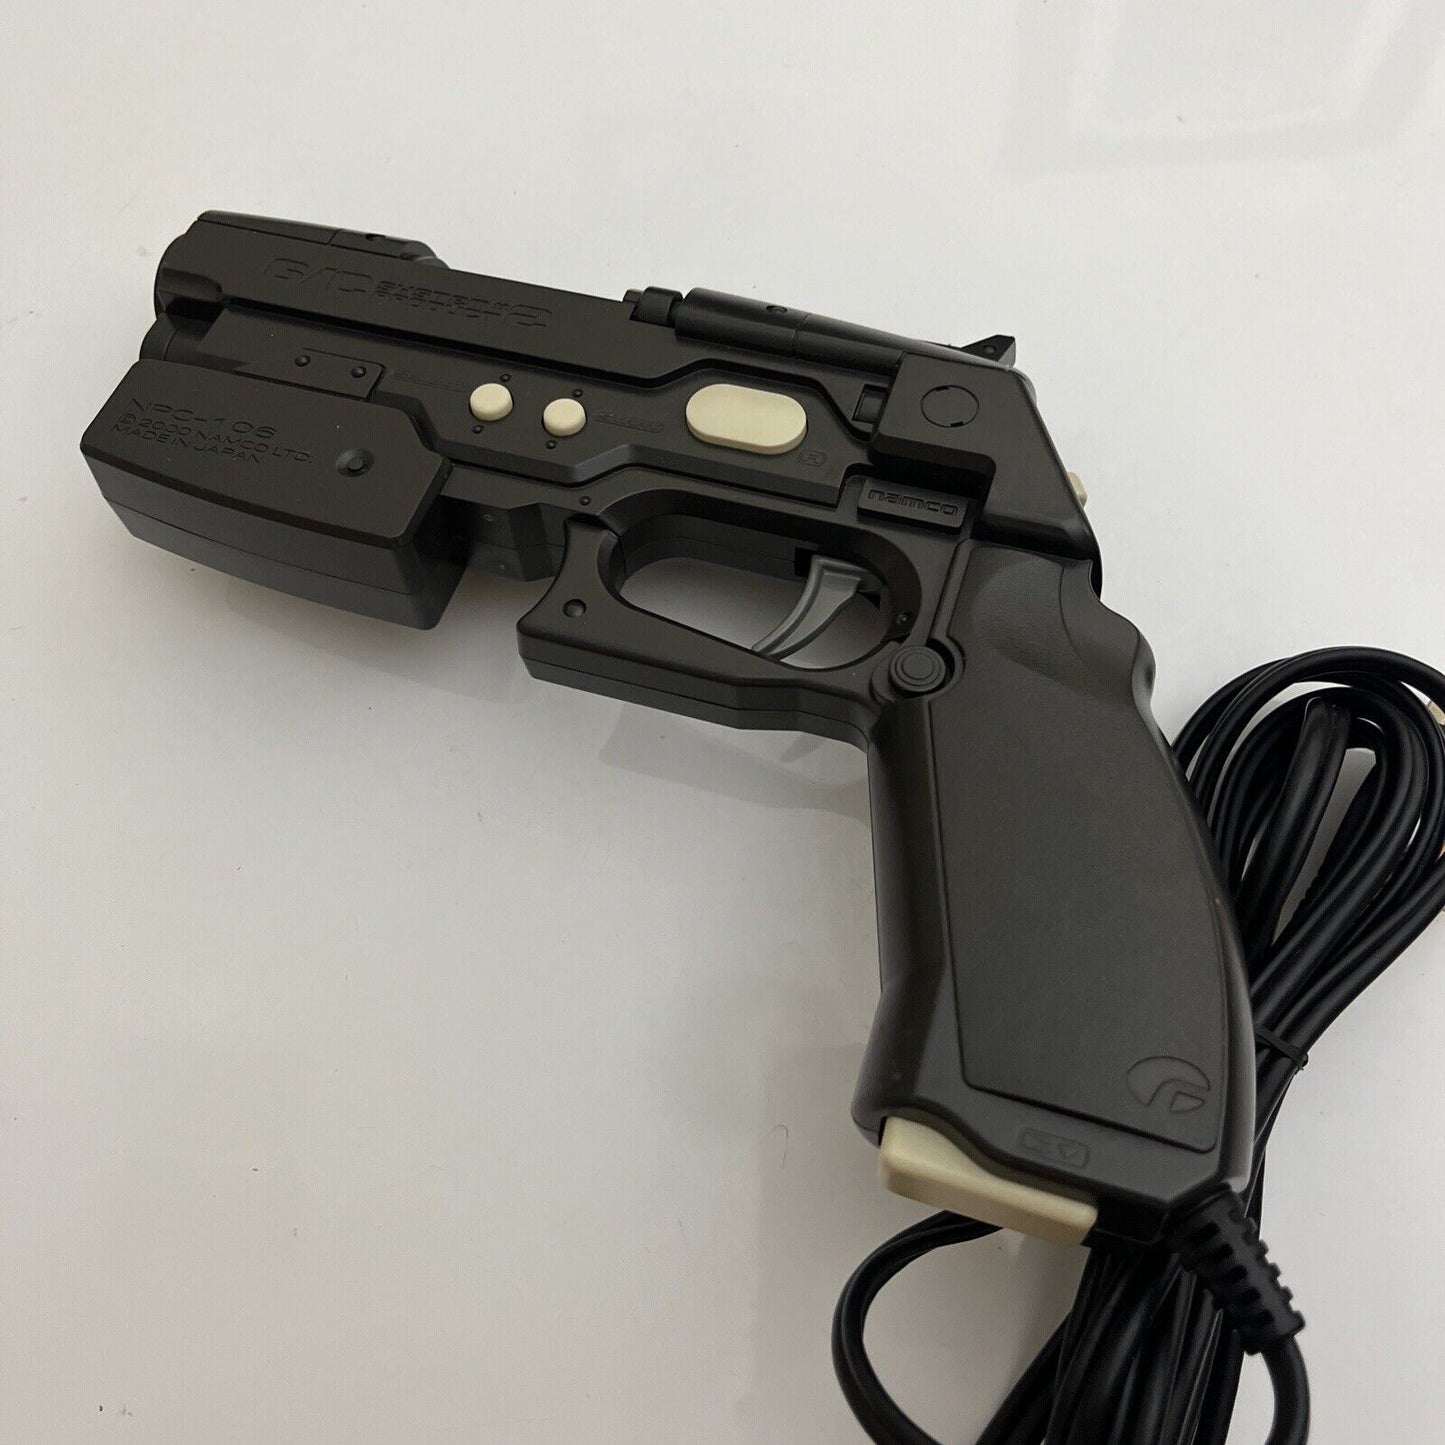 Official Namco Guncon 2 Light Gun Controller Sony Playstation 2 PS2 USB NPC-106